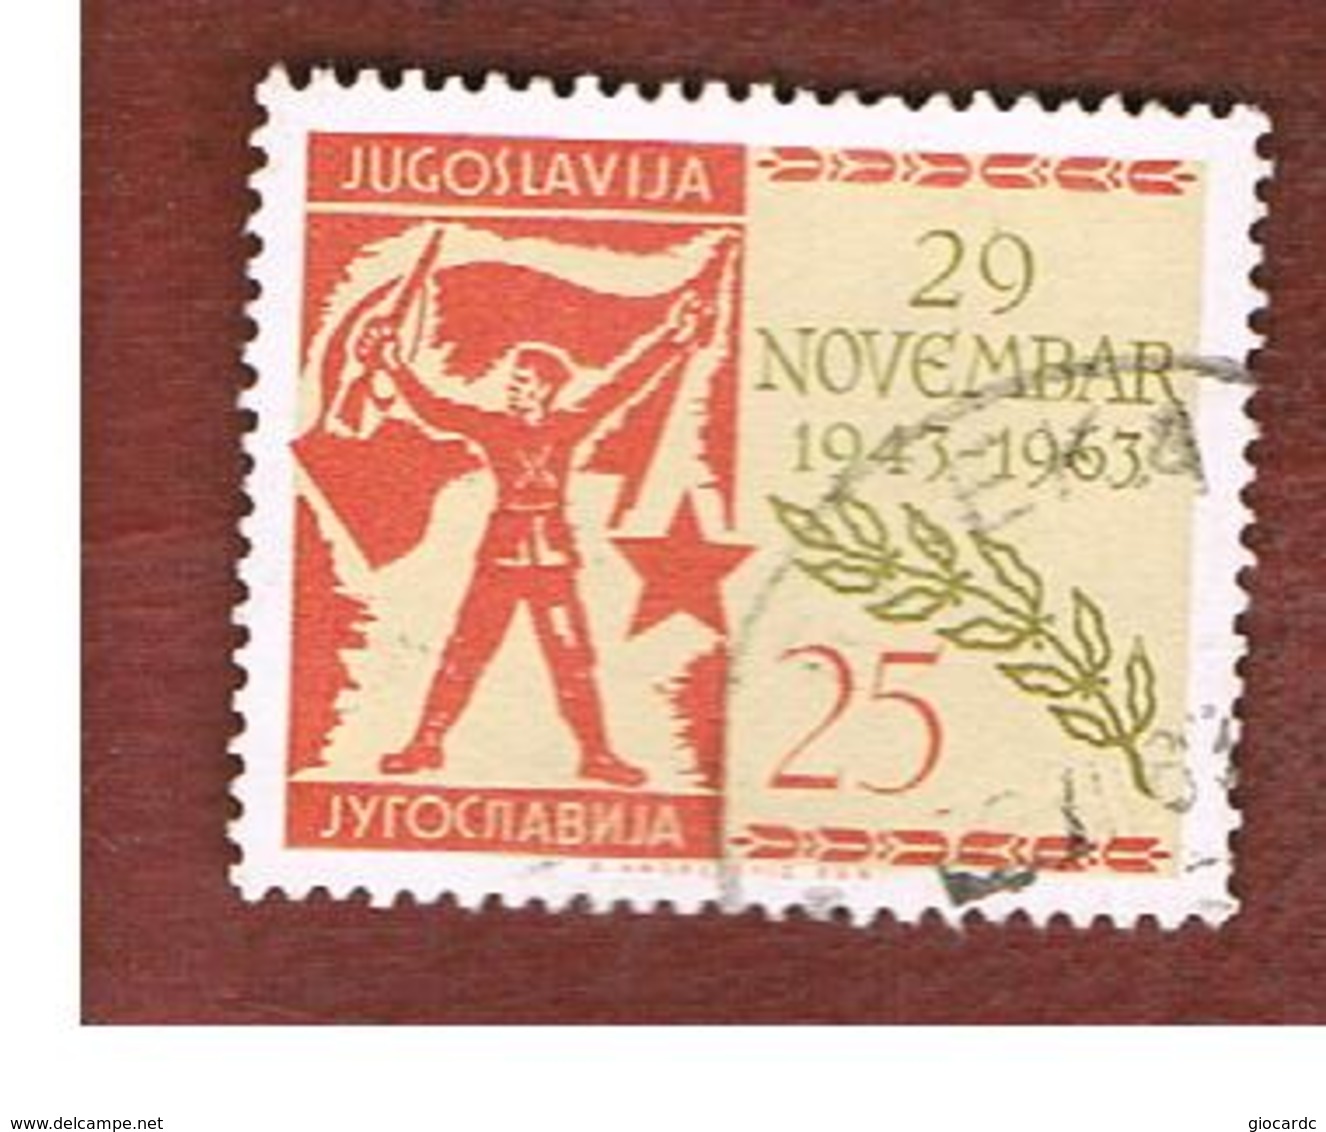 JUGOSLAVIA (YUGOSLAVIA)   - SG 1097   -    1963 20^ ANNIVERSARY OF YUGOSLAV DEMOCRATIC FEDERATION  -   USED - Usati